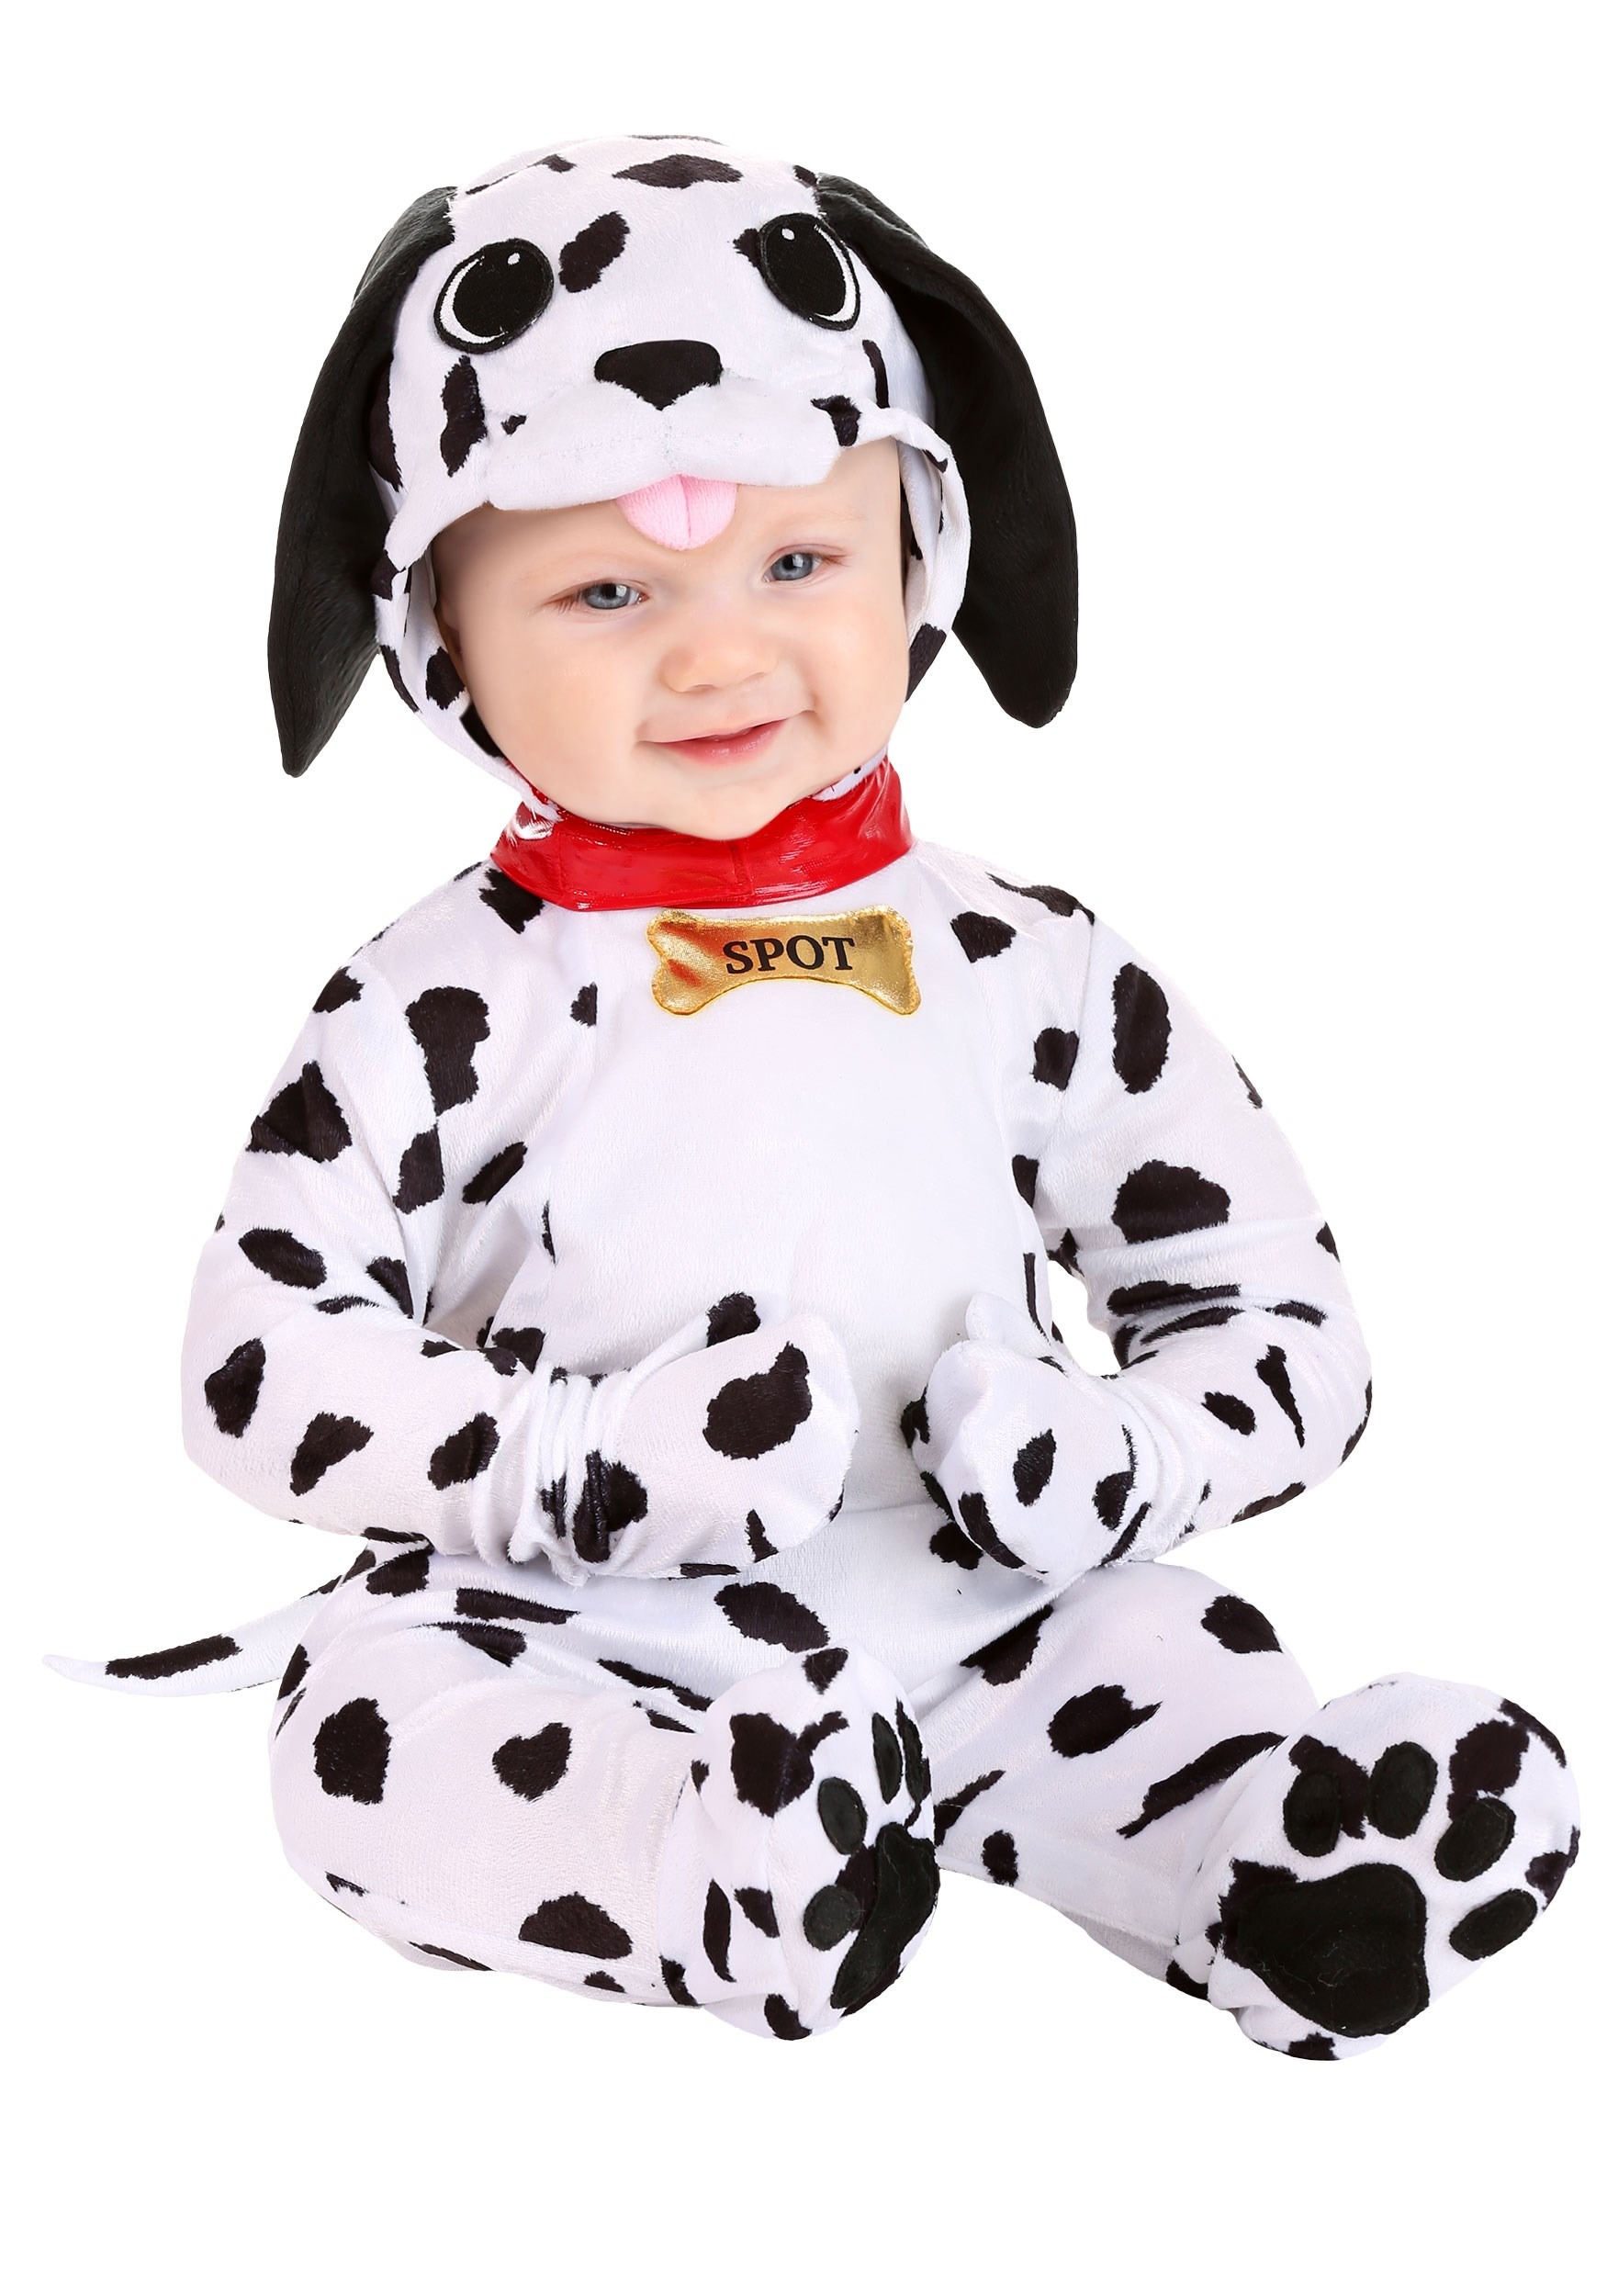 Dapper Dalmatian Infant Costume